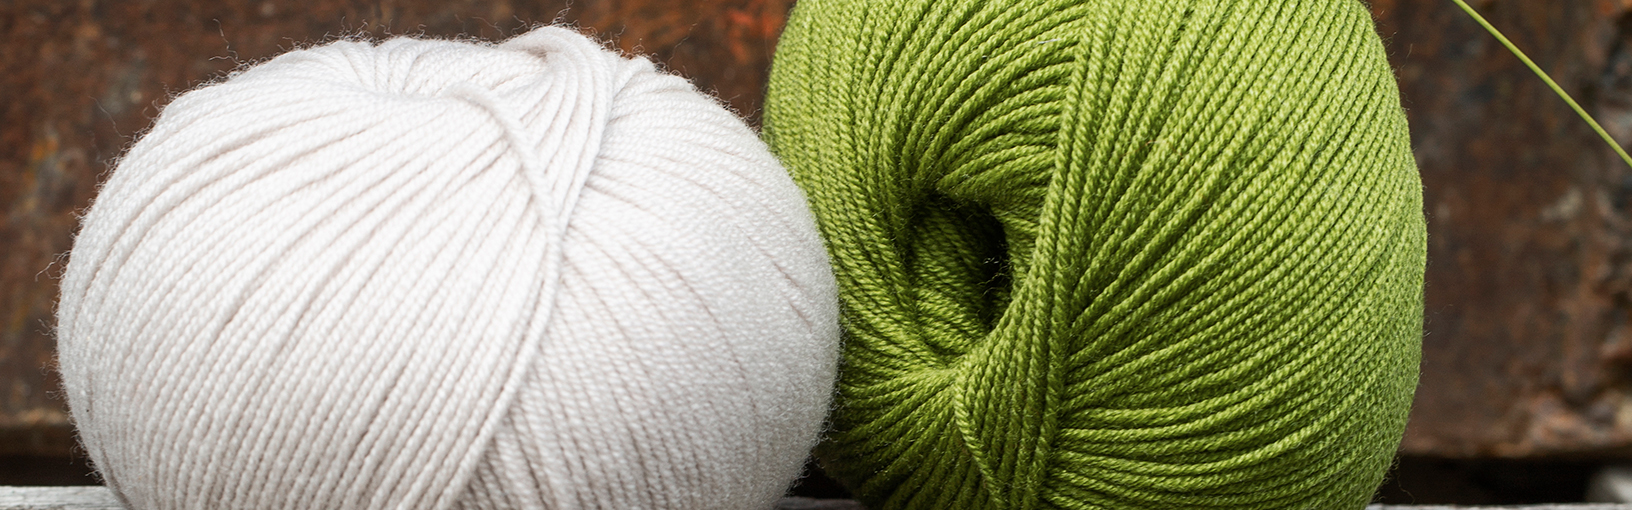 High quality yarns for knitting, crocheting & felting Lana Grossa Yarns | Autumn / Winter